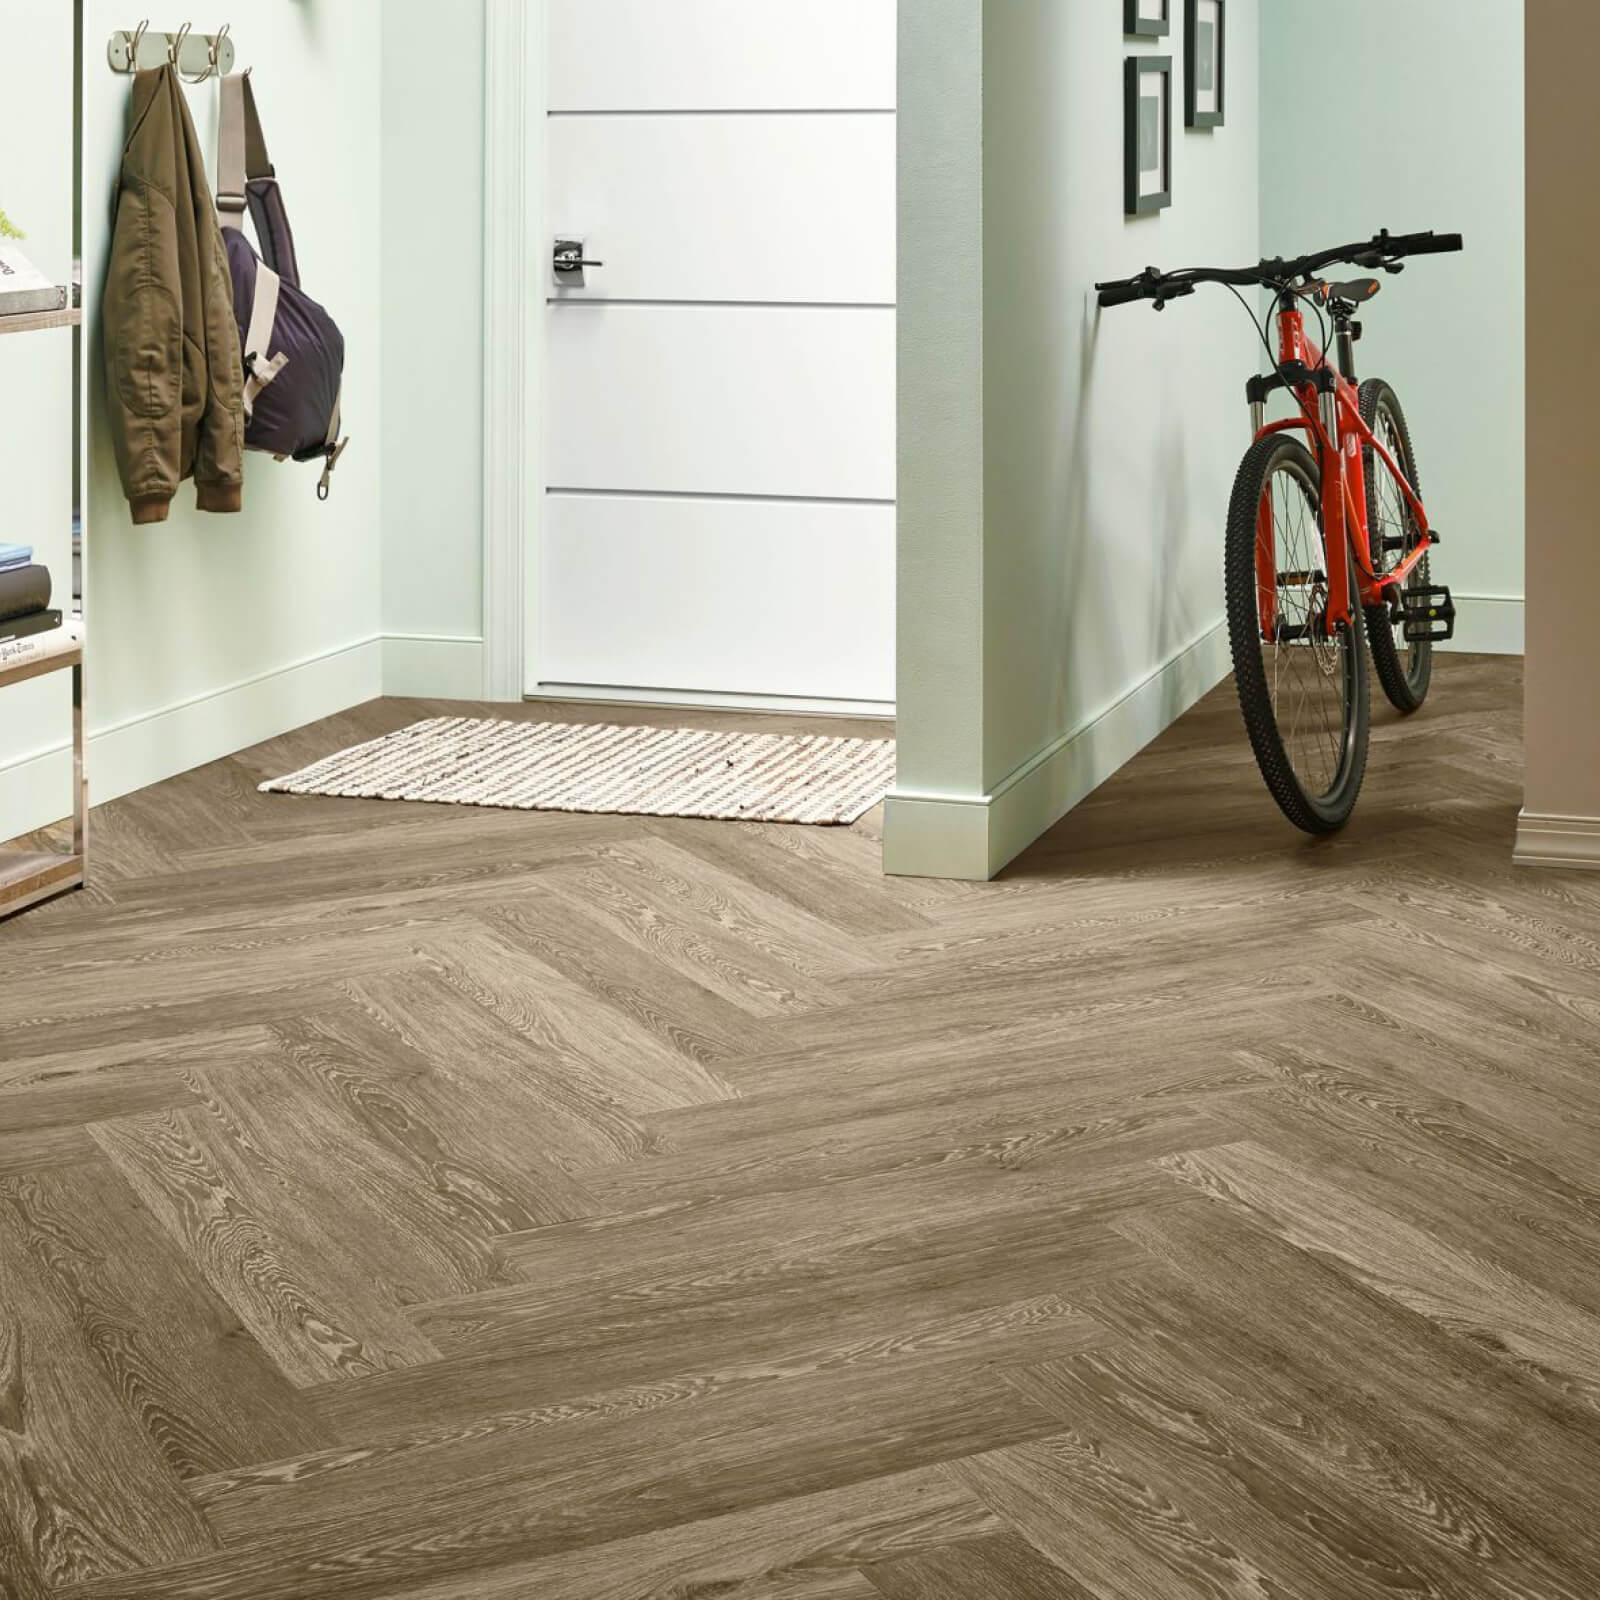 Glee chevron tile flooring | Flooring Direct